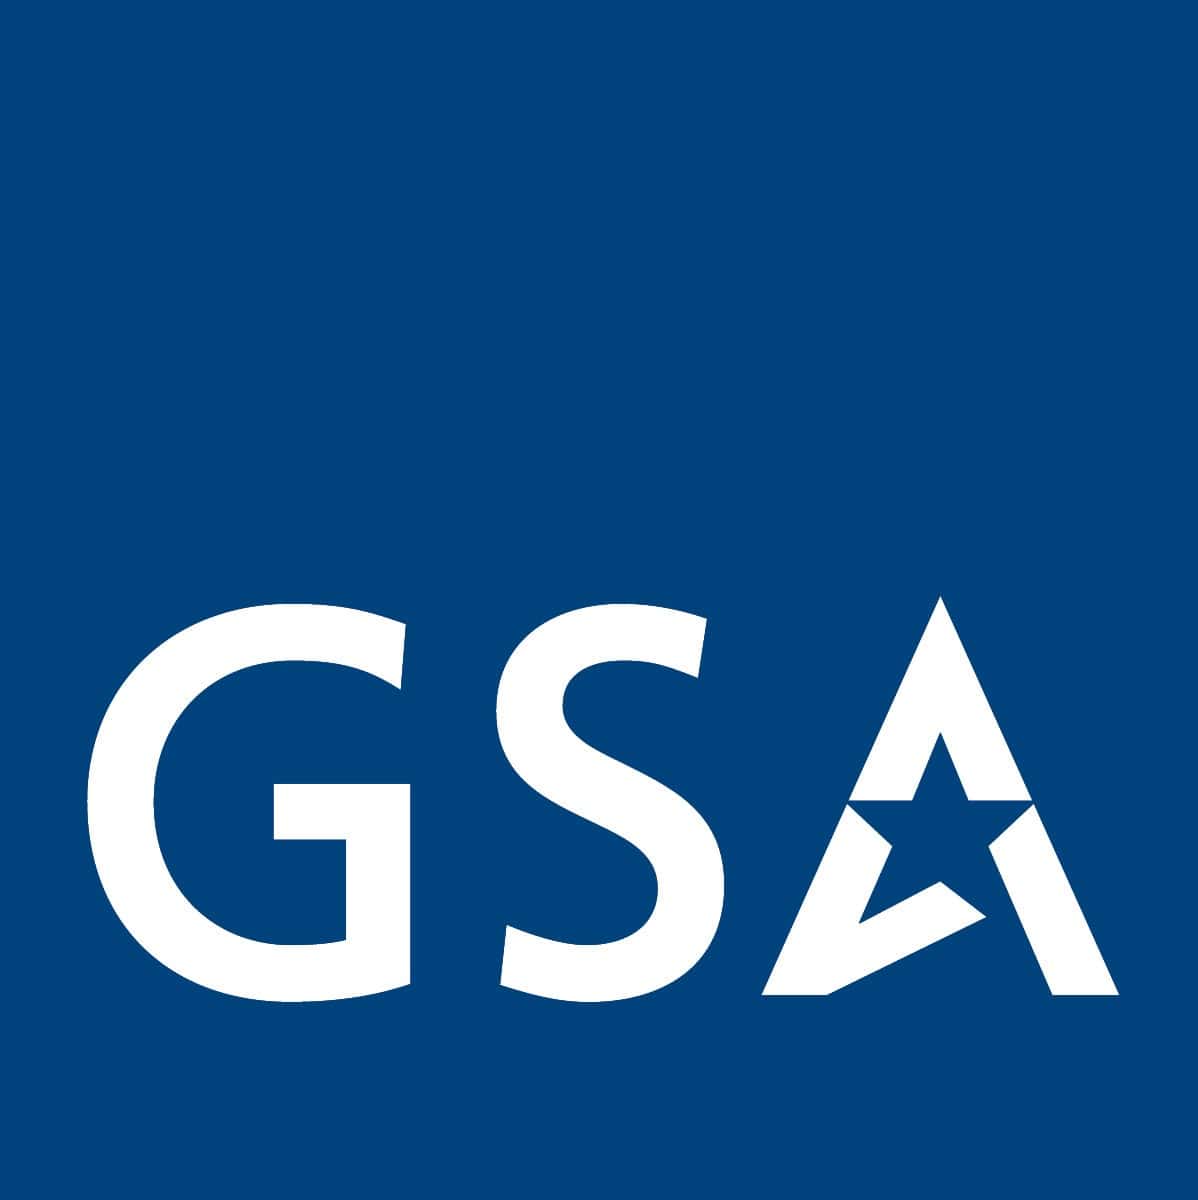 AFA - GSA cerified in 2013 